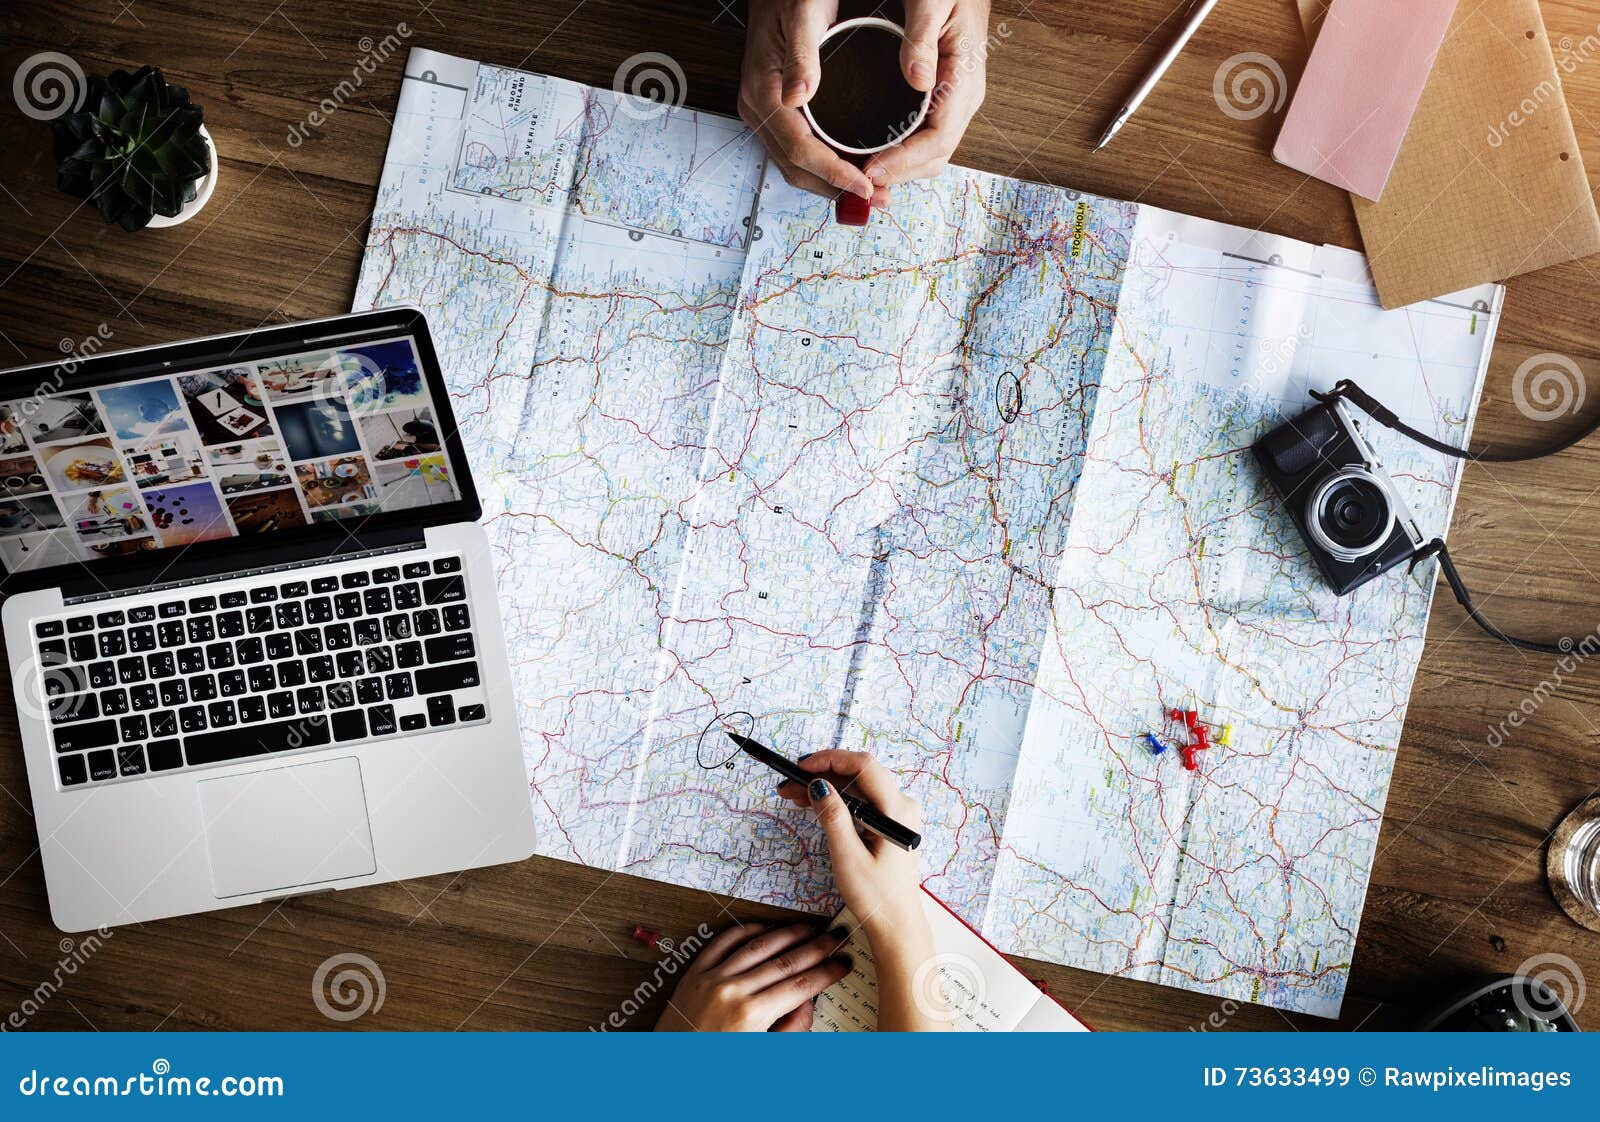 travel trip map direction exploration planning concept